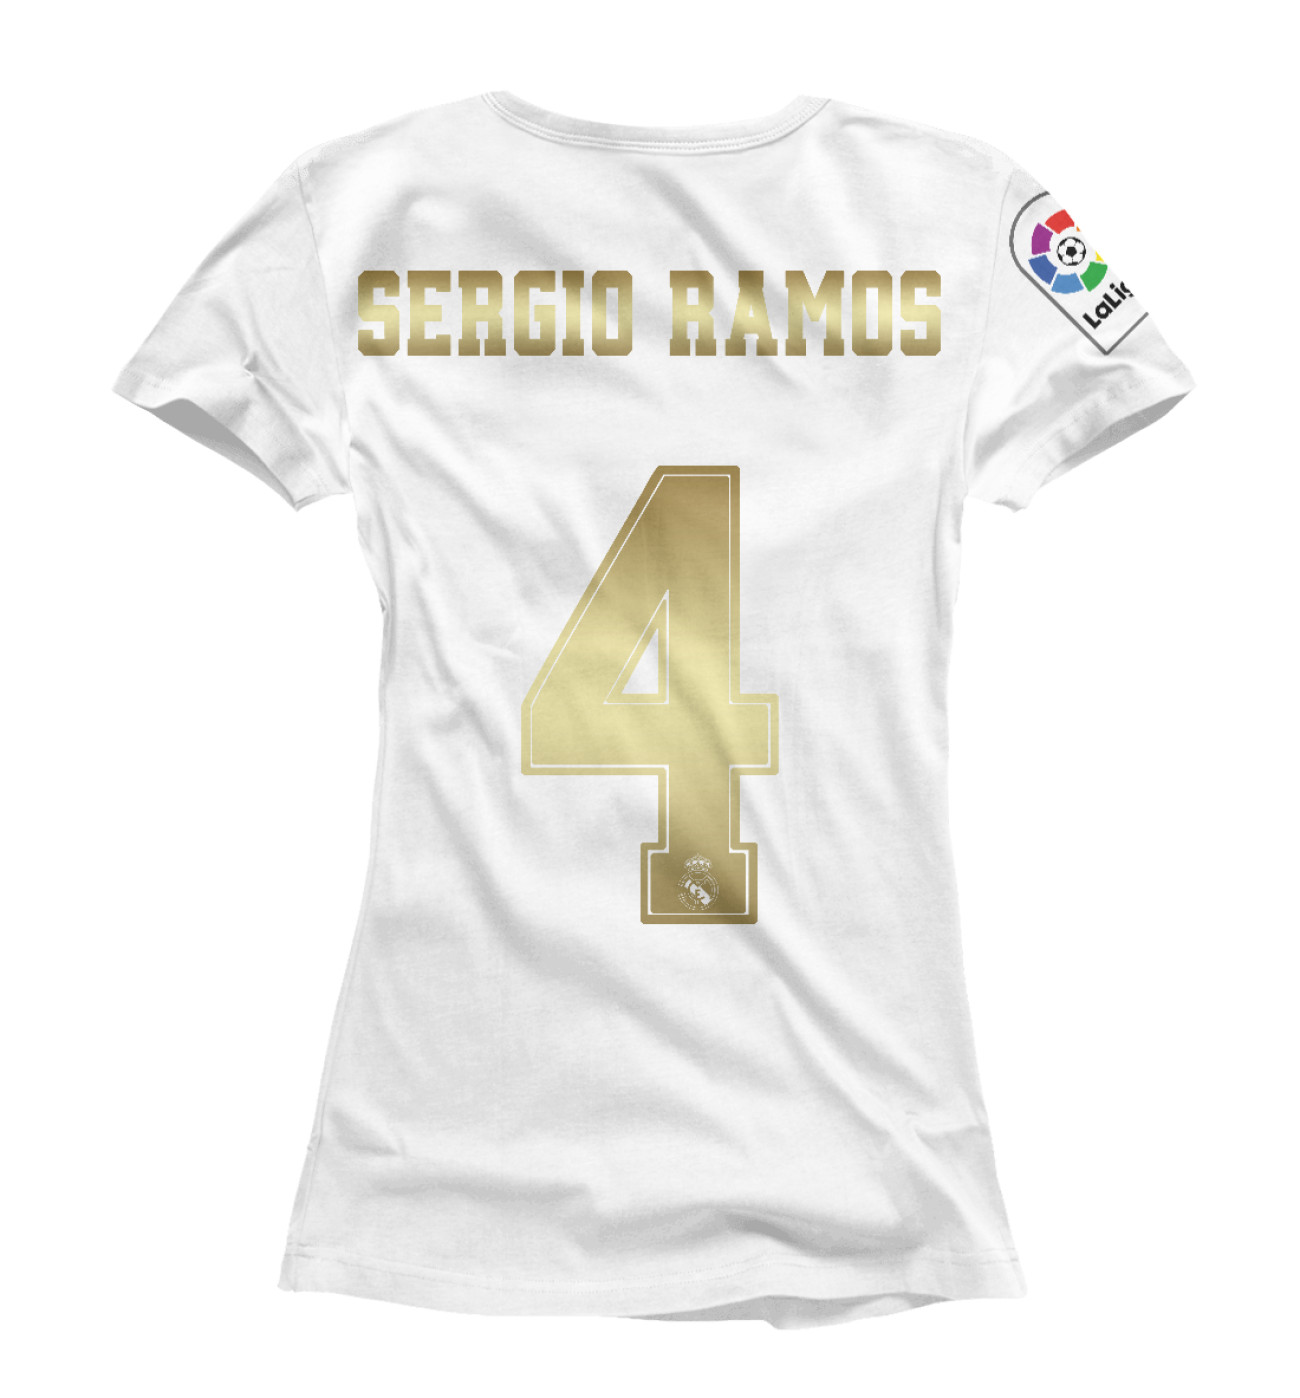 Женская Футболка Sergio Ramos форма, артикул: REA-575564-fut-1